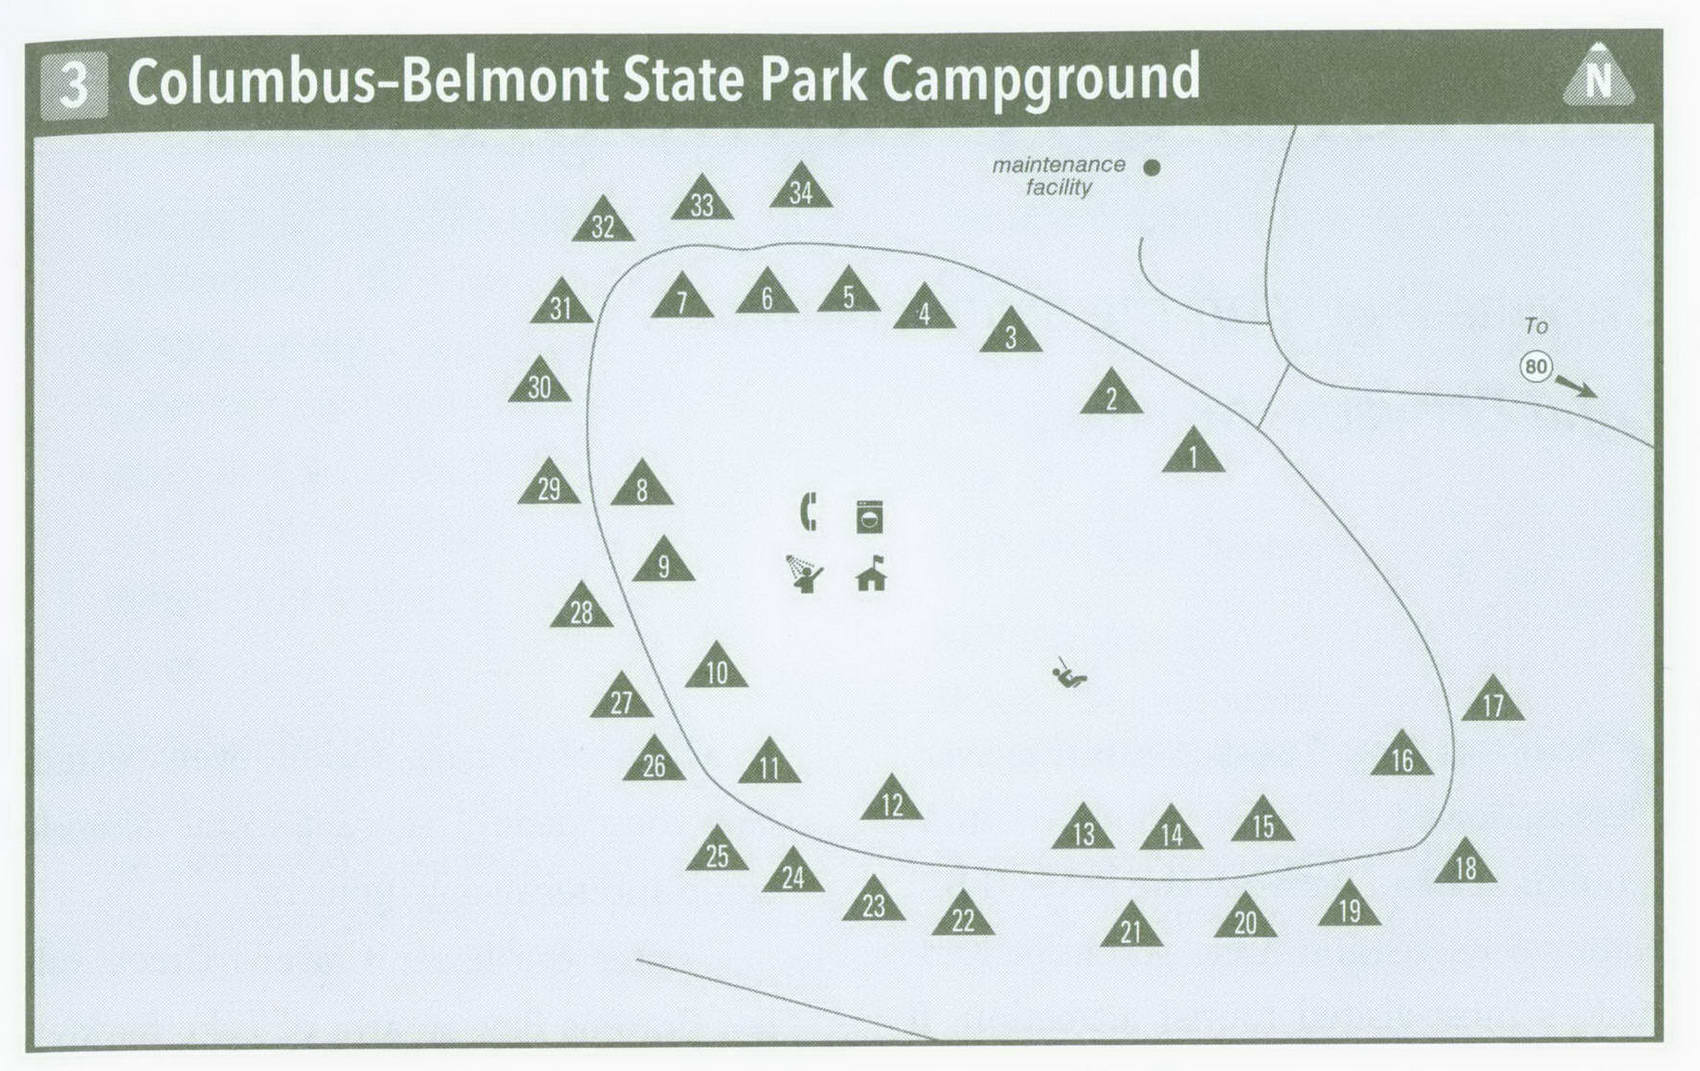 Plan of Columbus-Belmont State Park Campground